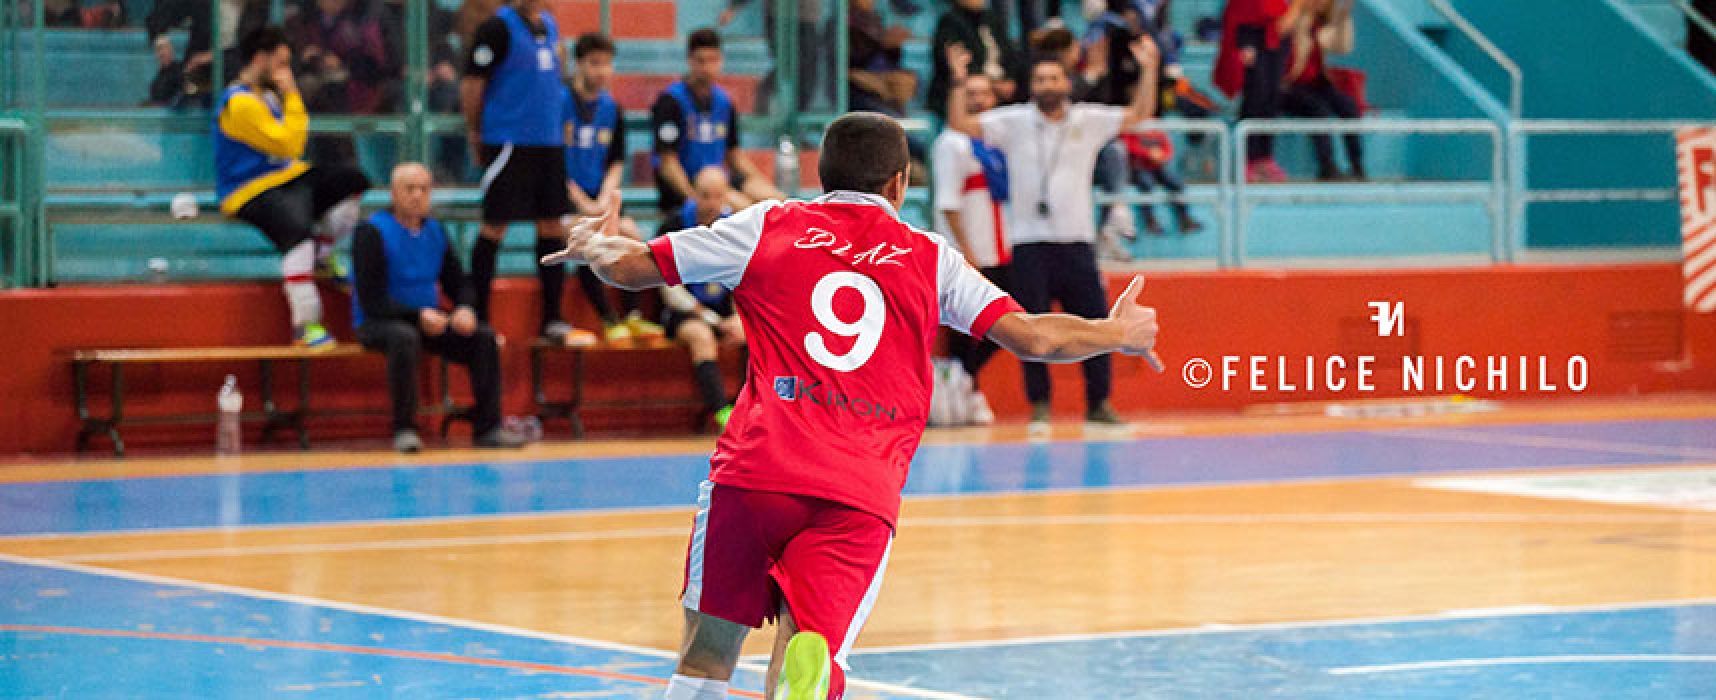 De Cillis serve il tris, Diaz corsara in casa del Futsal Brindisi